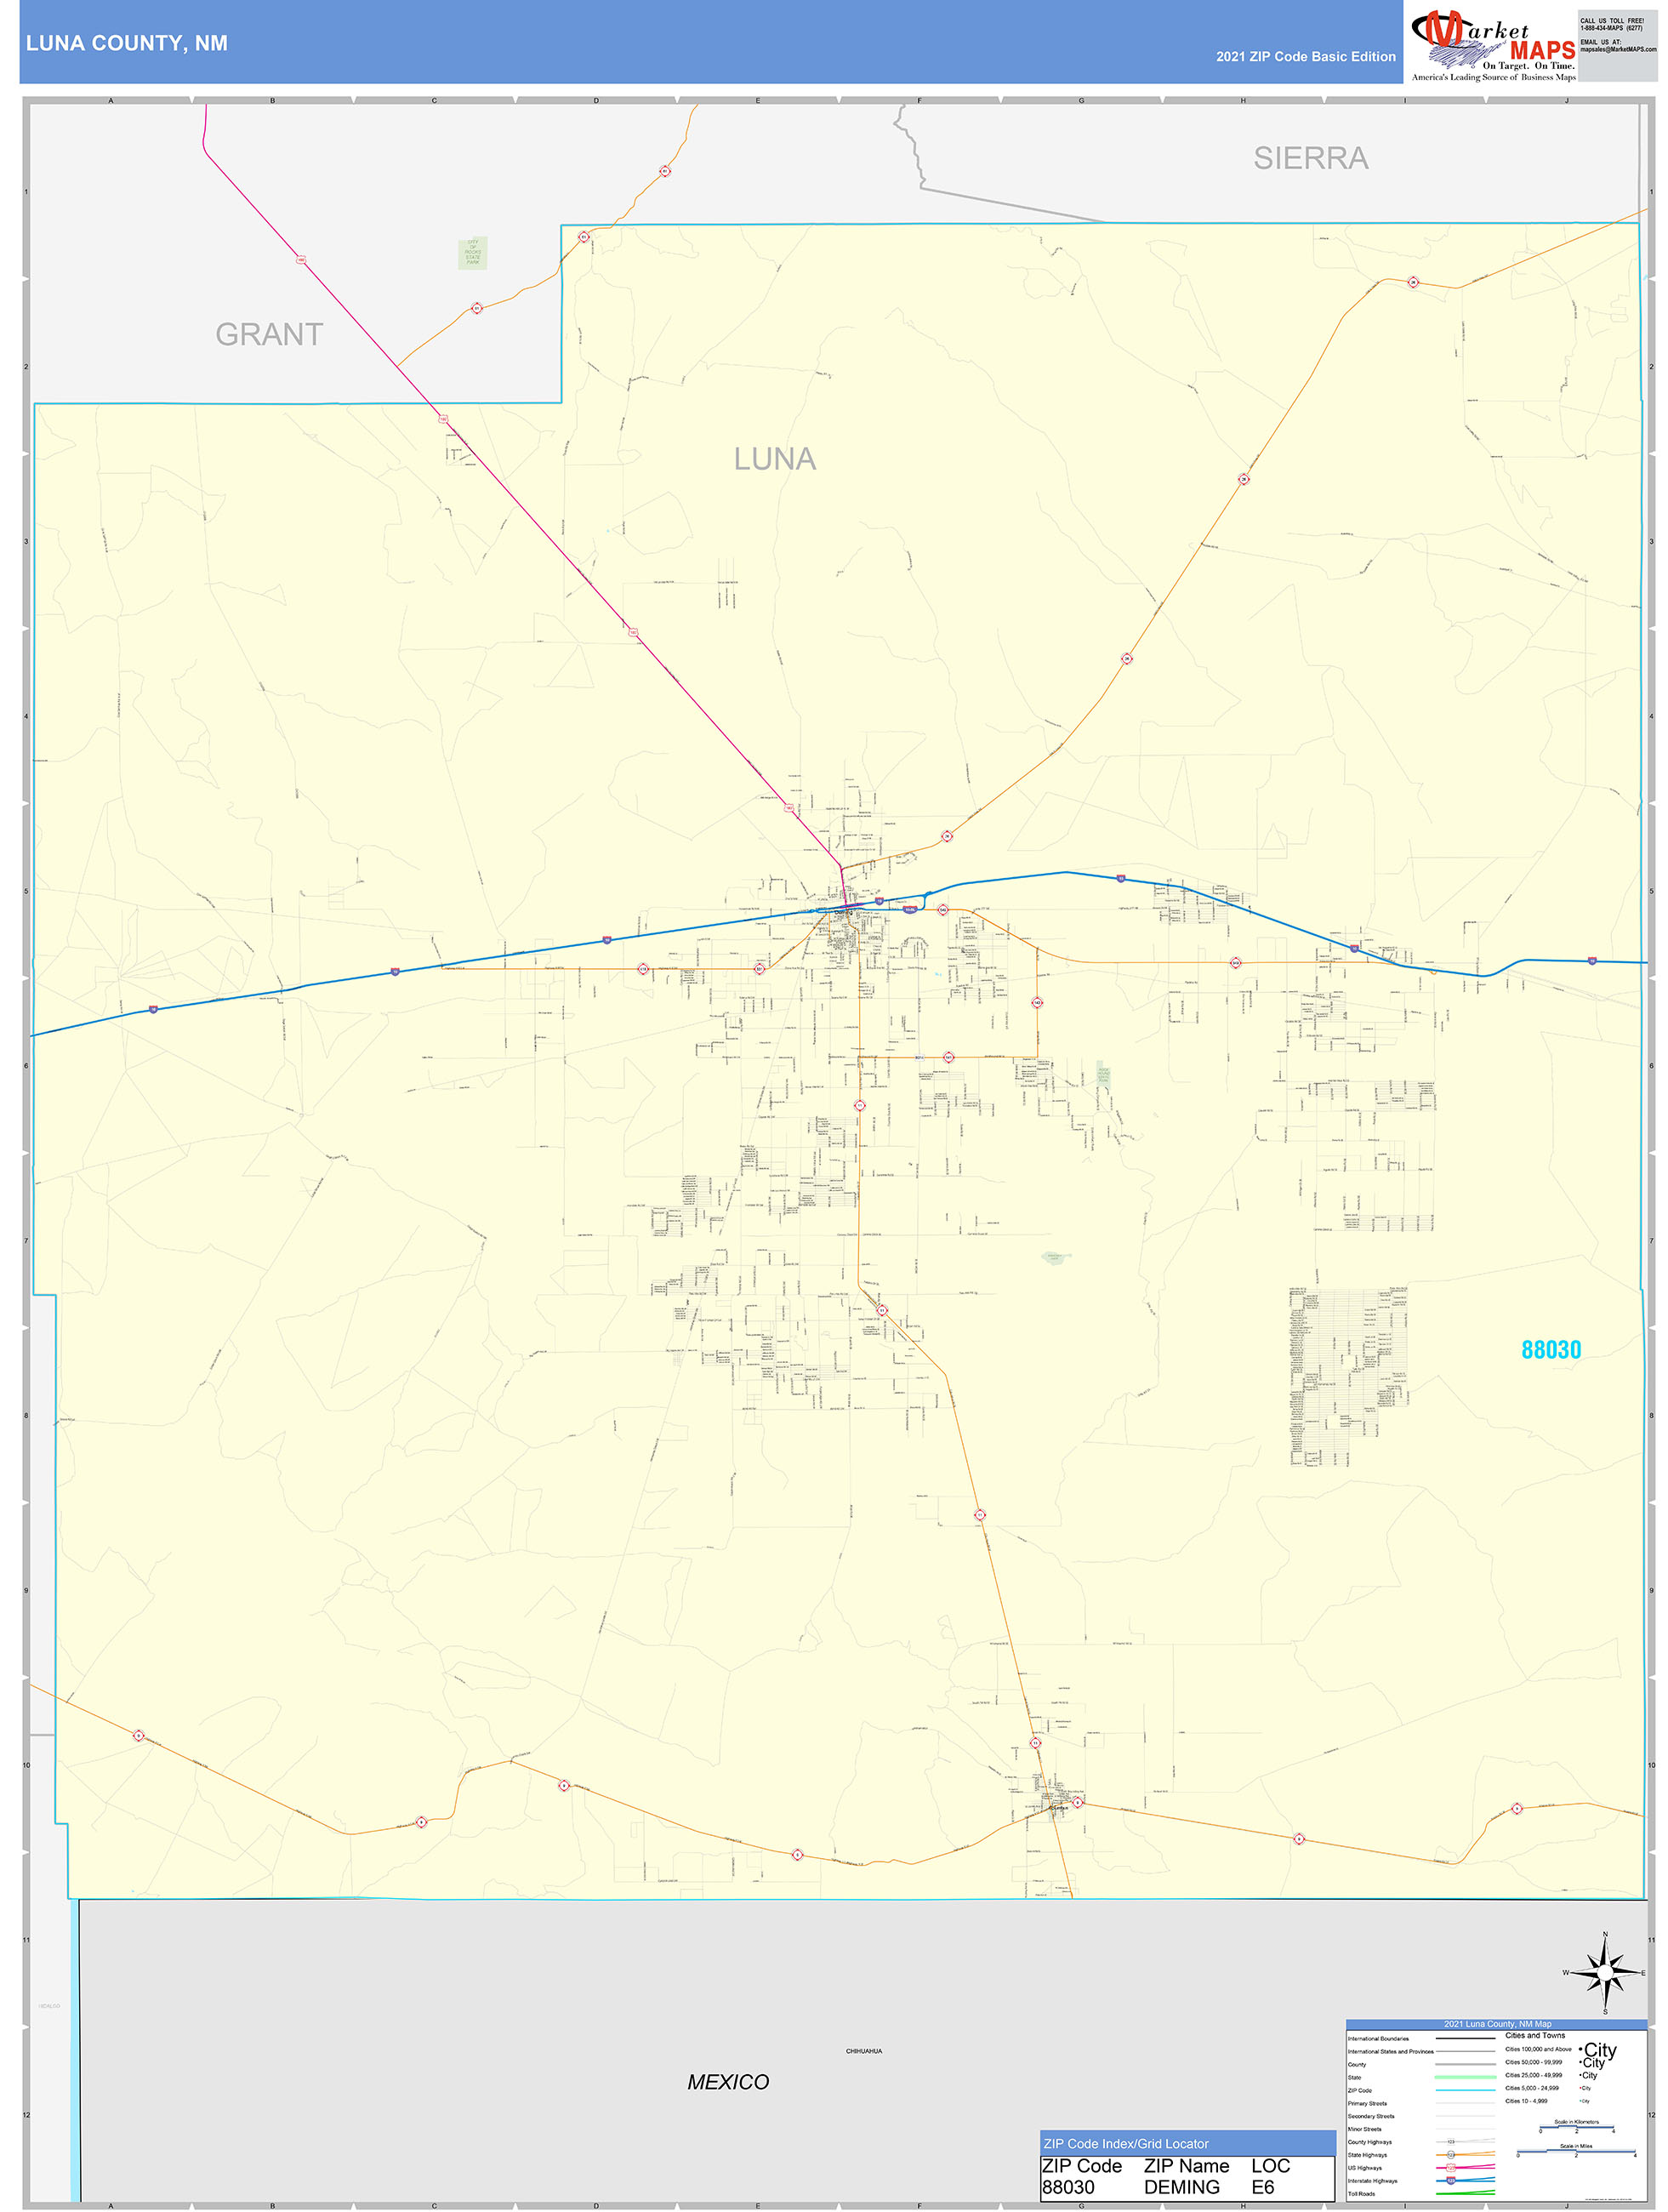 Luna County NM Zip Code Wall Map Basic Style by MarketMAPS MapSales